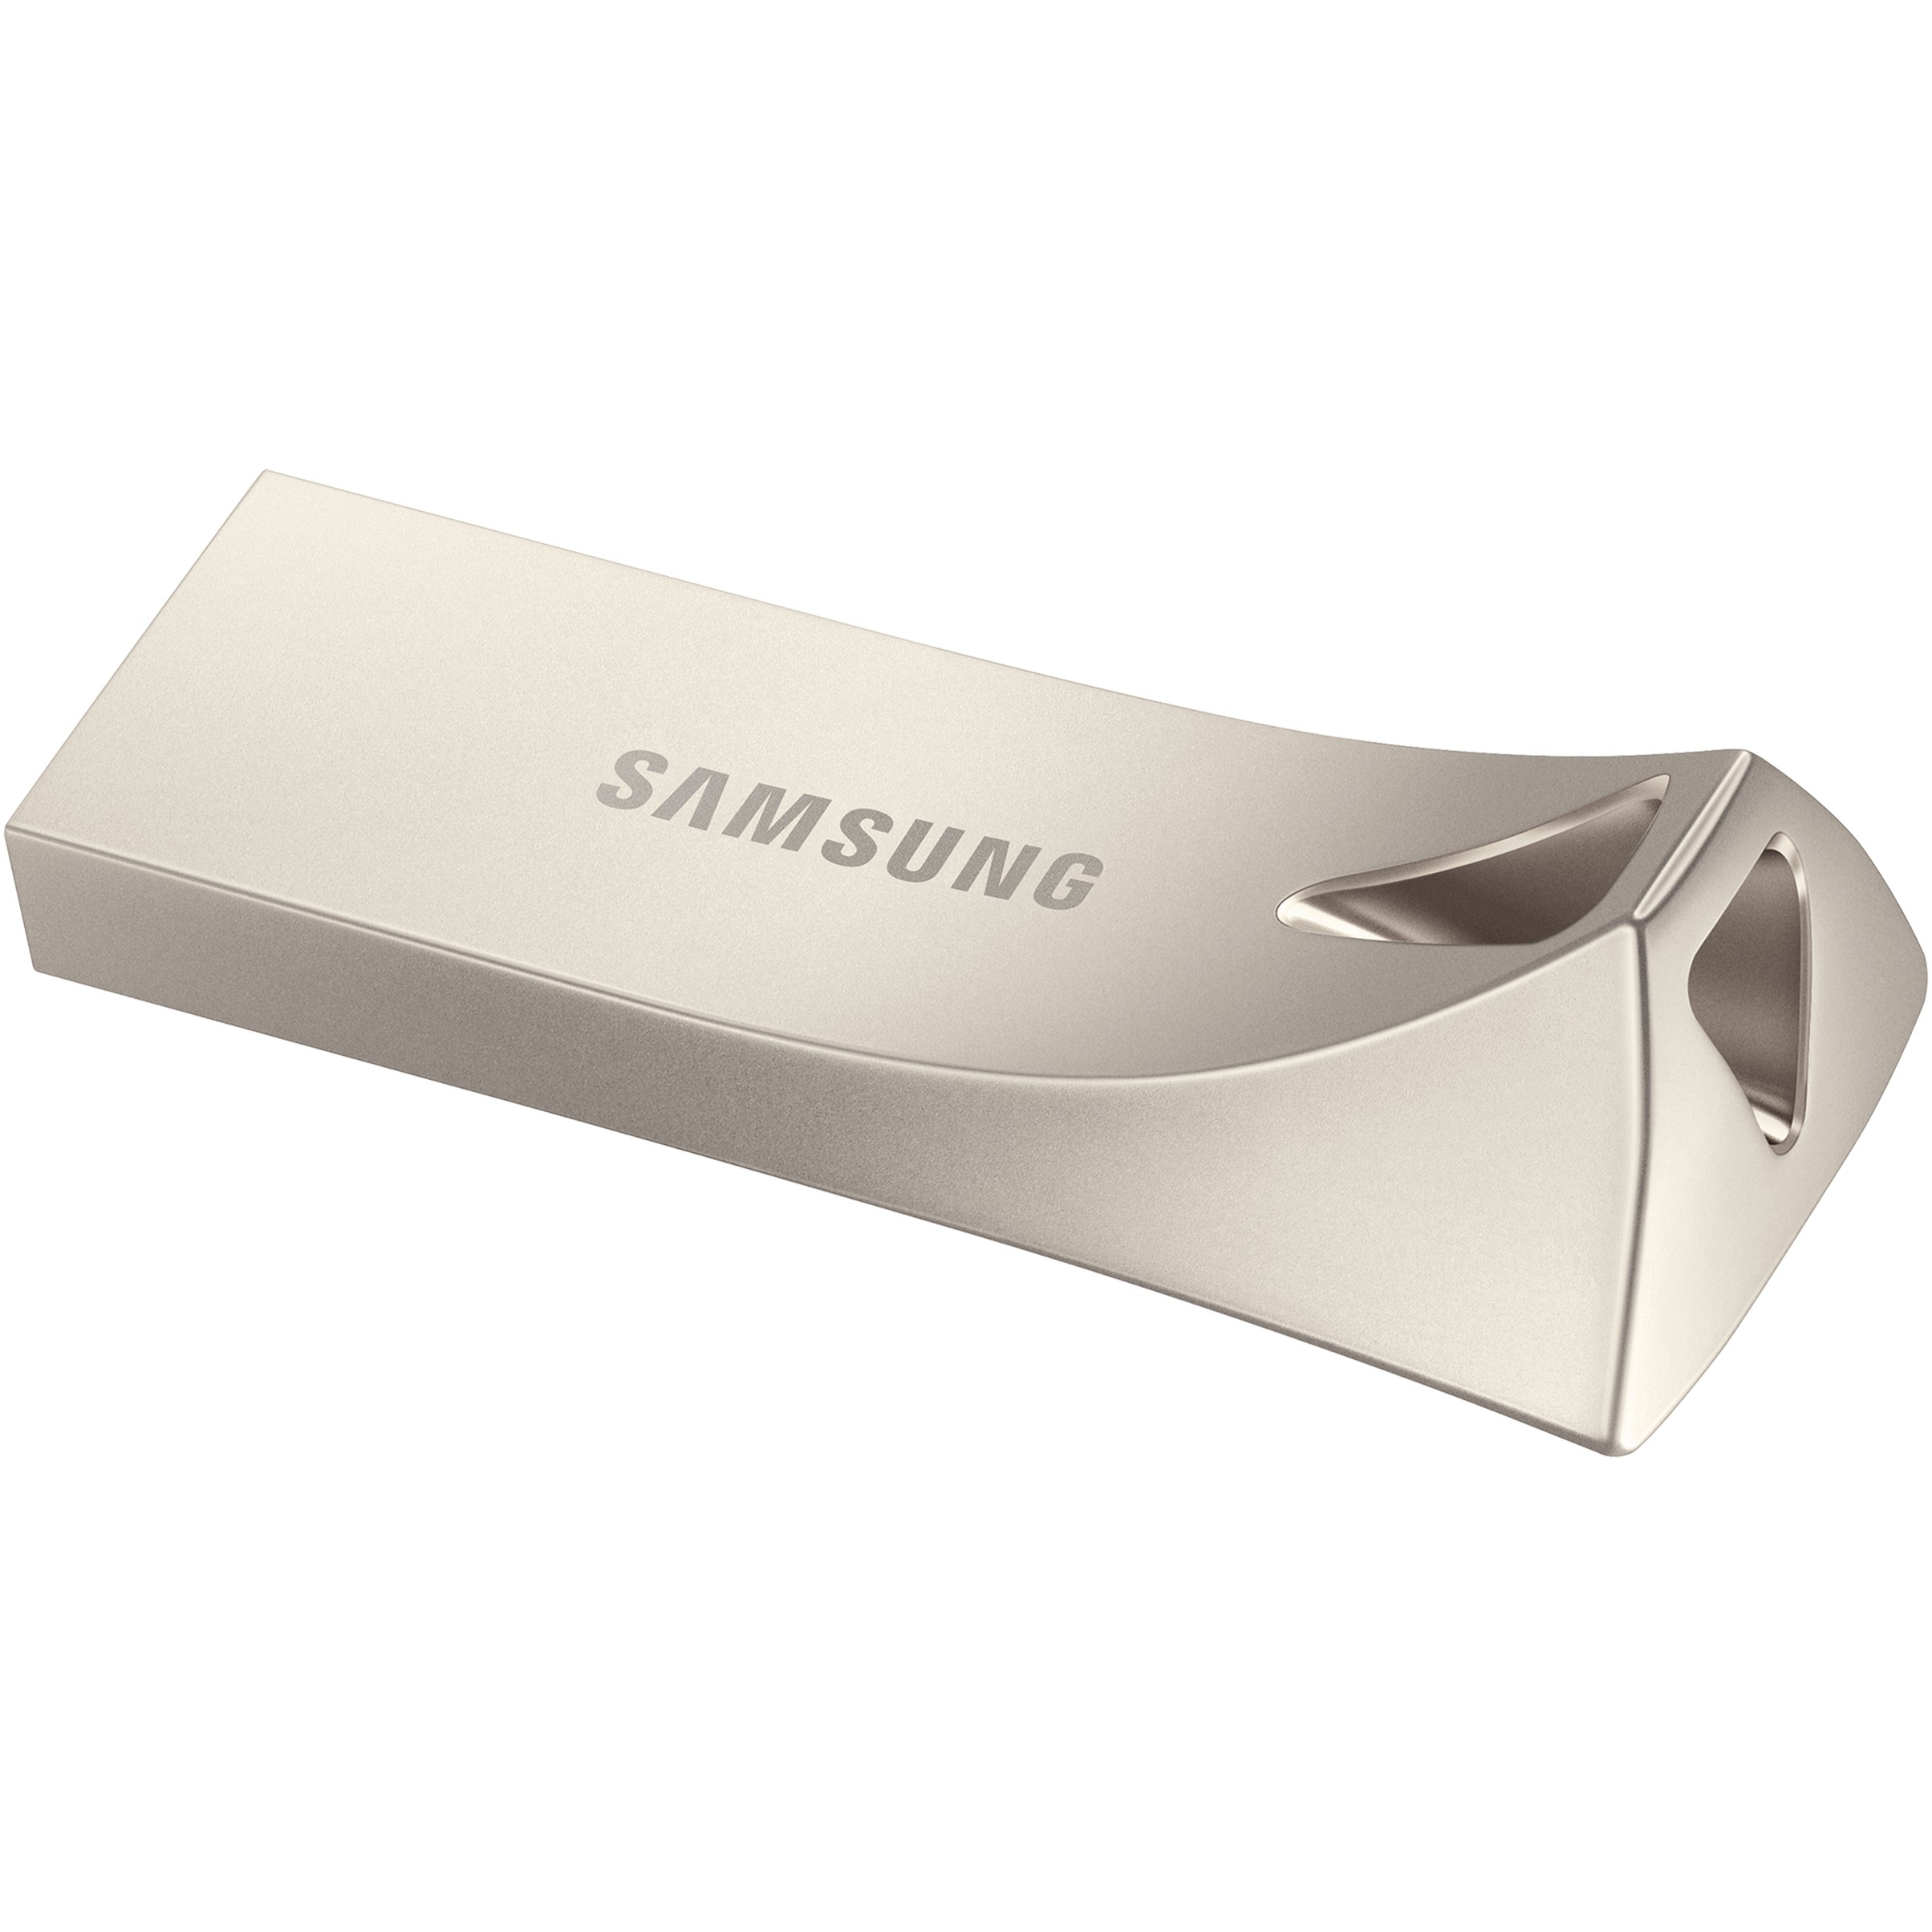 SAMSUNG MUF-64BE3/APC, USB-Stick, Samsung MUF-64BE USB  (BILD6)